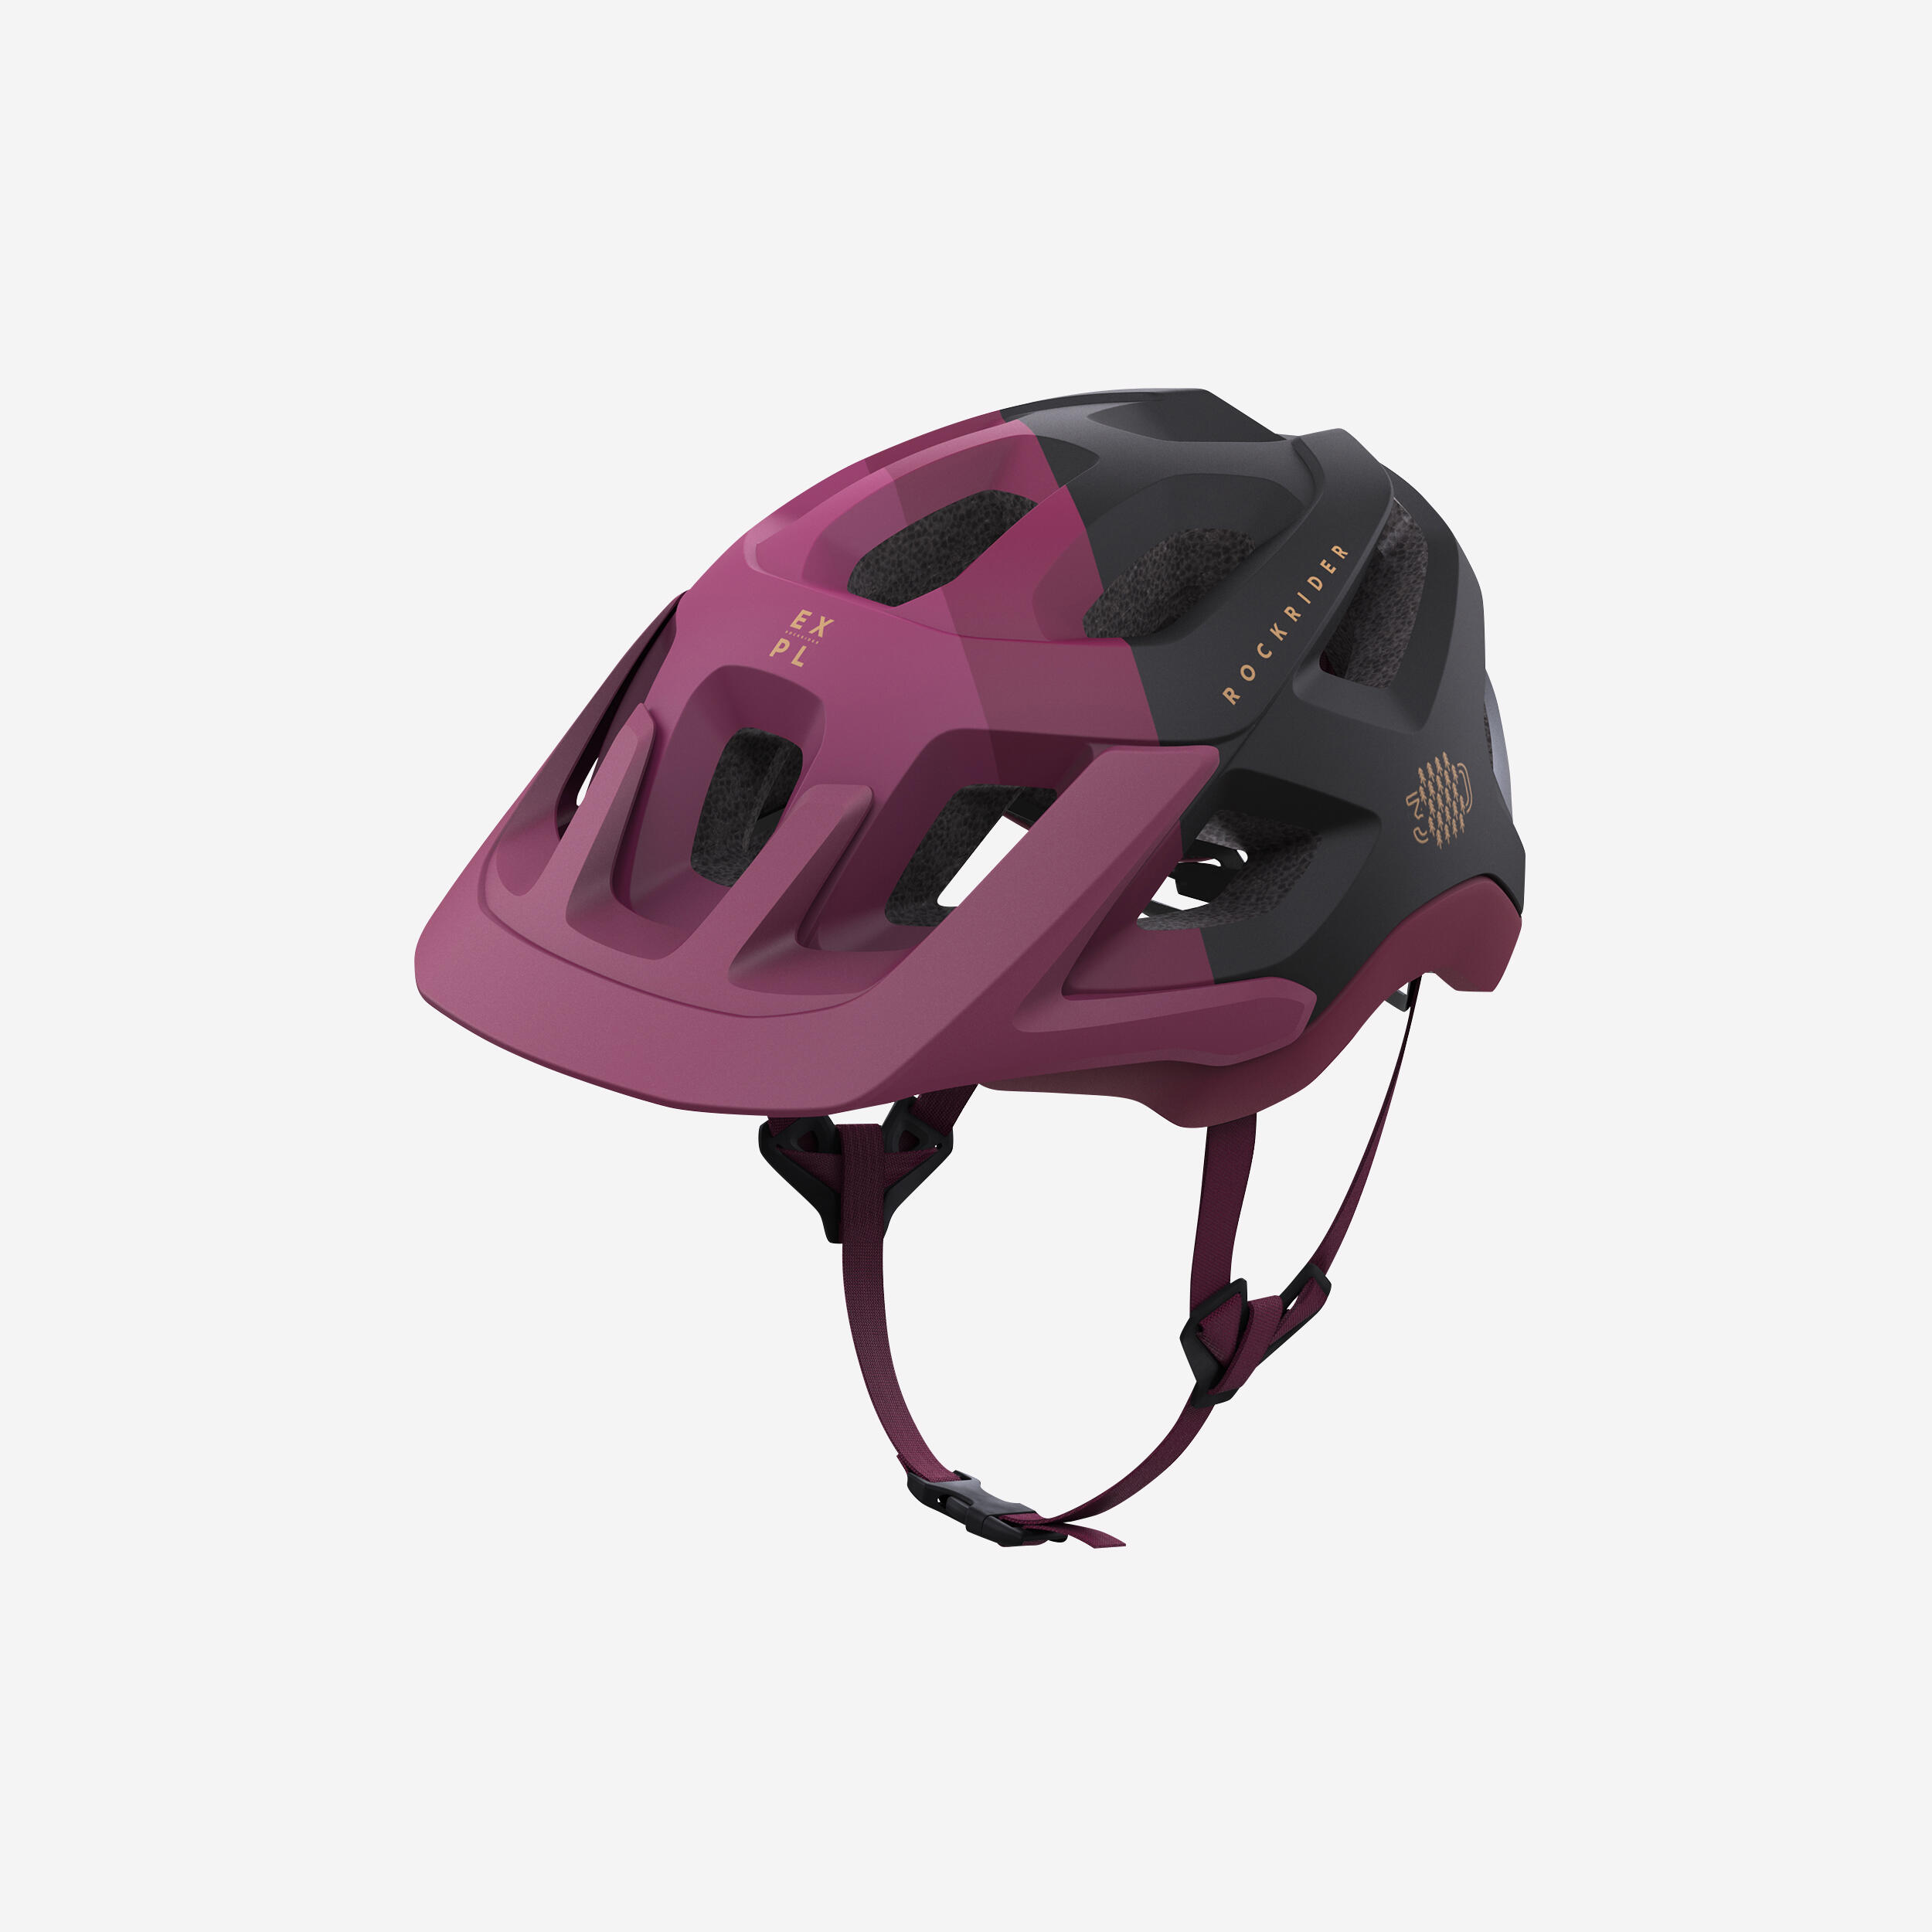 ROCKRIDER Mountain Bike Helmet EXPL 500 - Purple/Black